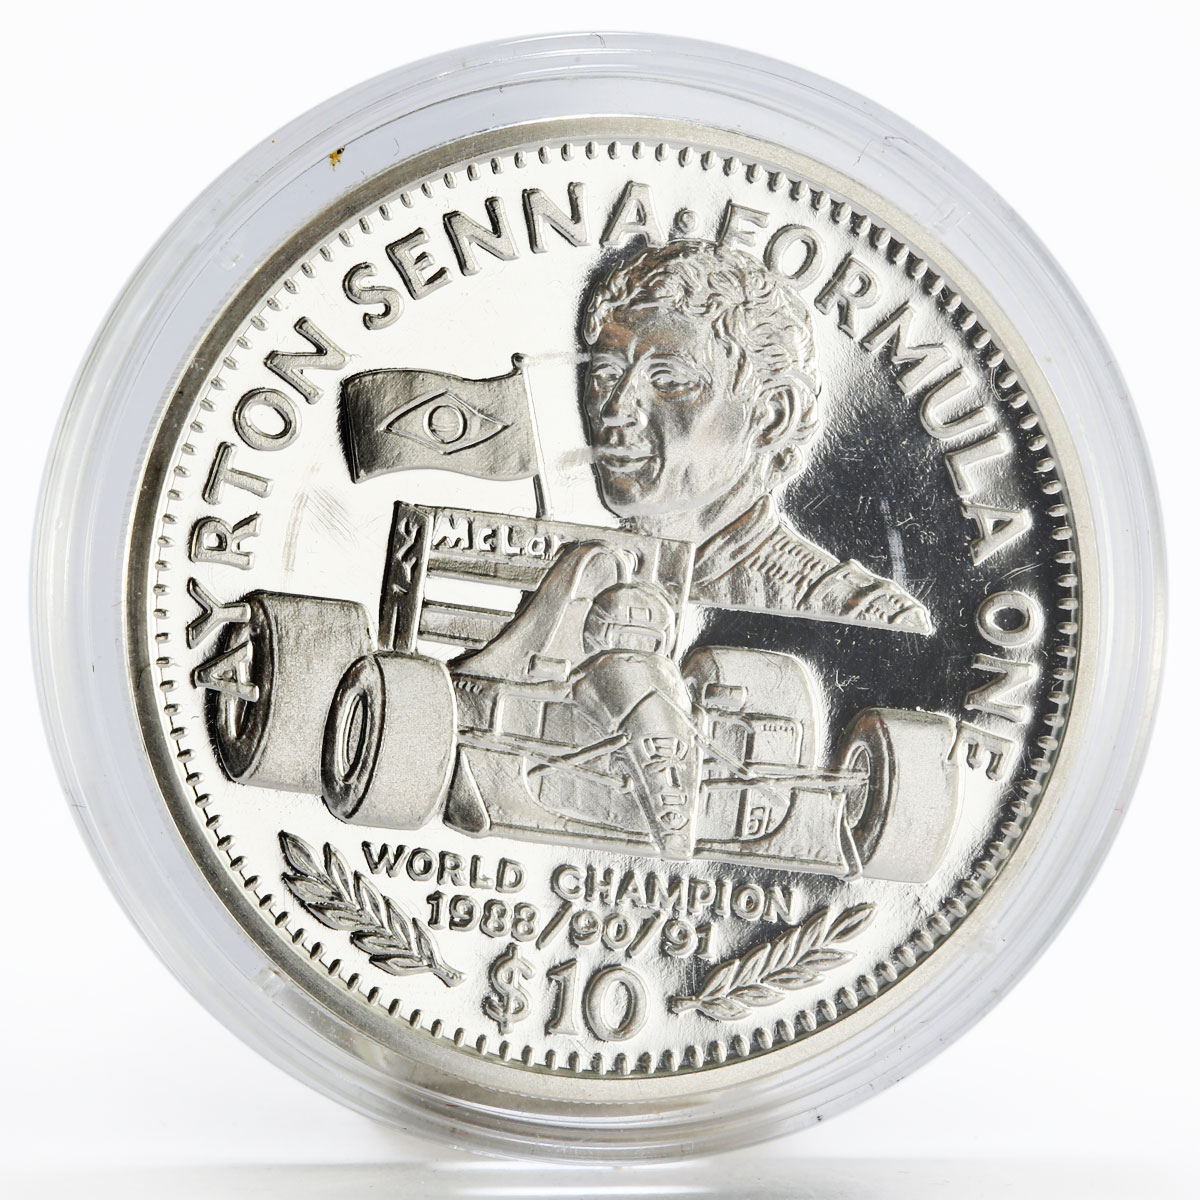 Liberia 10 dollars Formule One series Ayrton Senna proof silver coin 1992